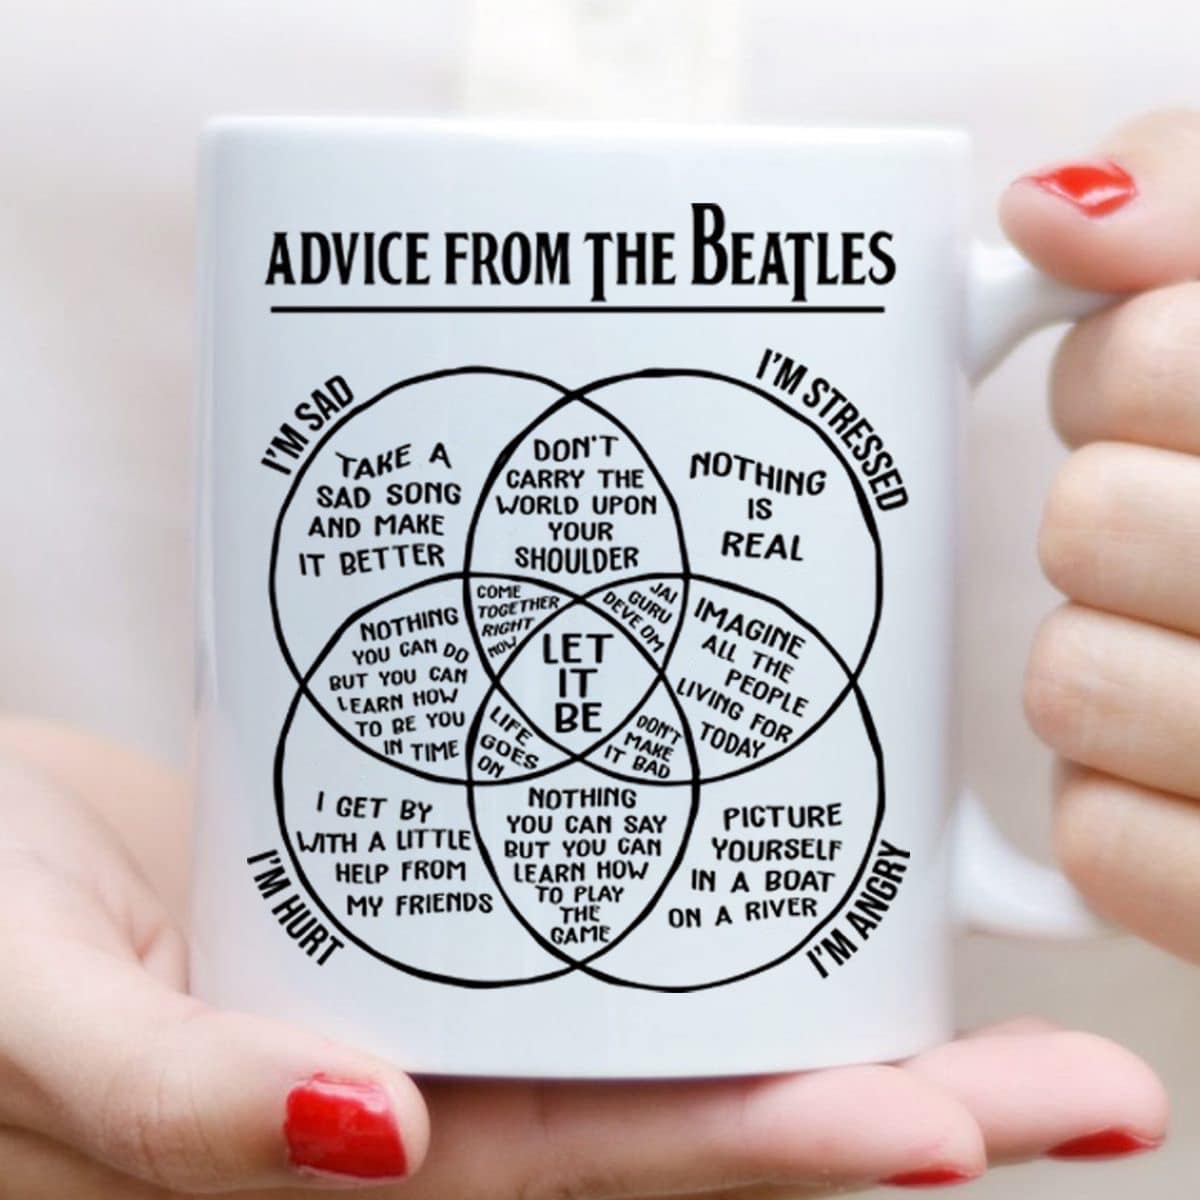 Advice From The Beatles.jpg